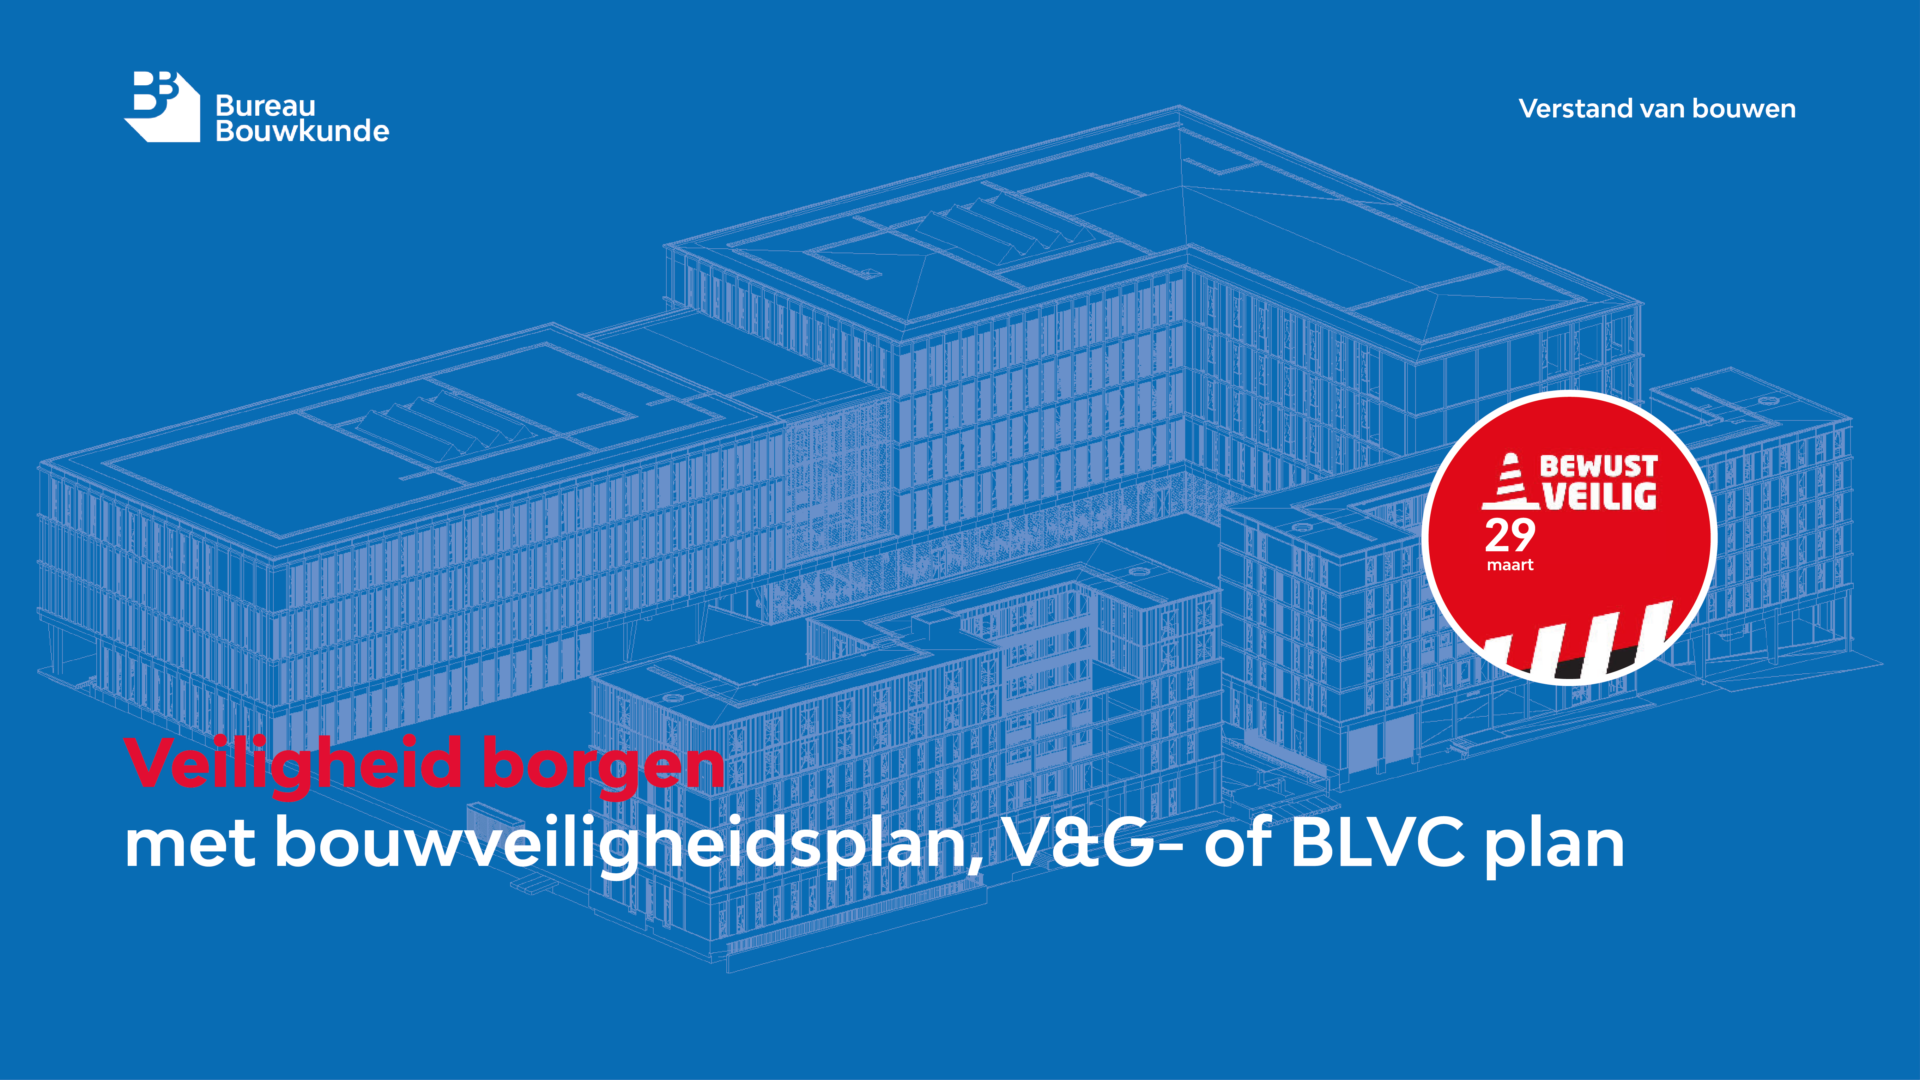 Veiligheid borgen met bouwveiligheidsplan, V&G- of BLVC plan